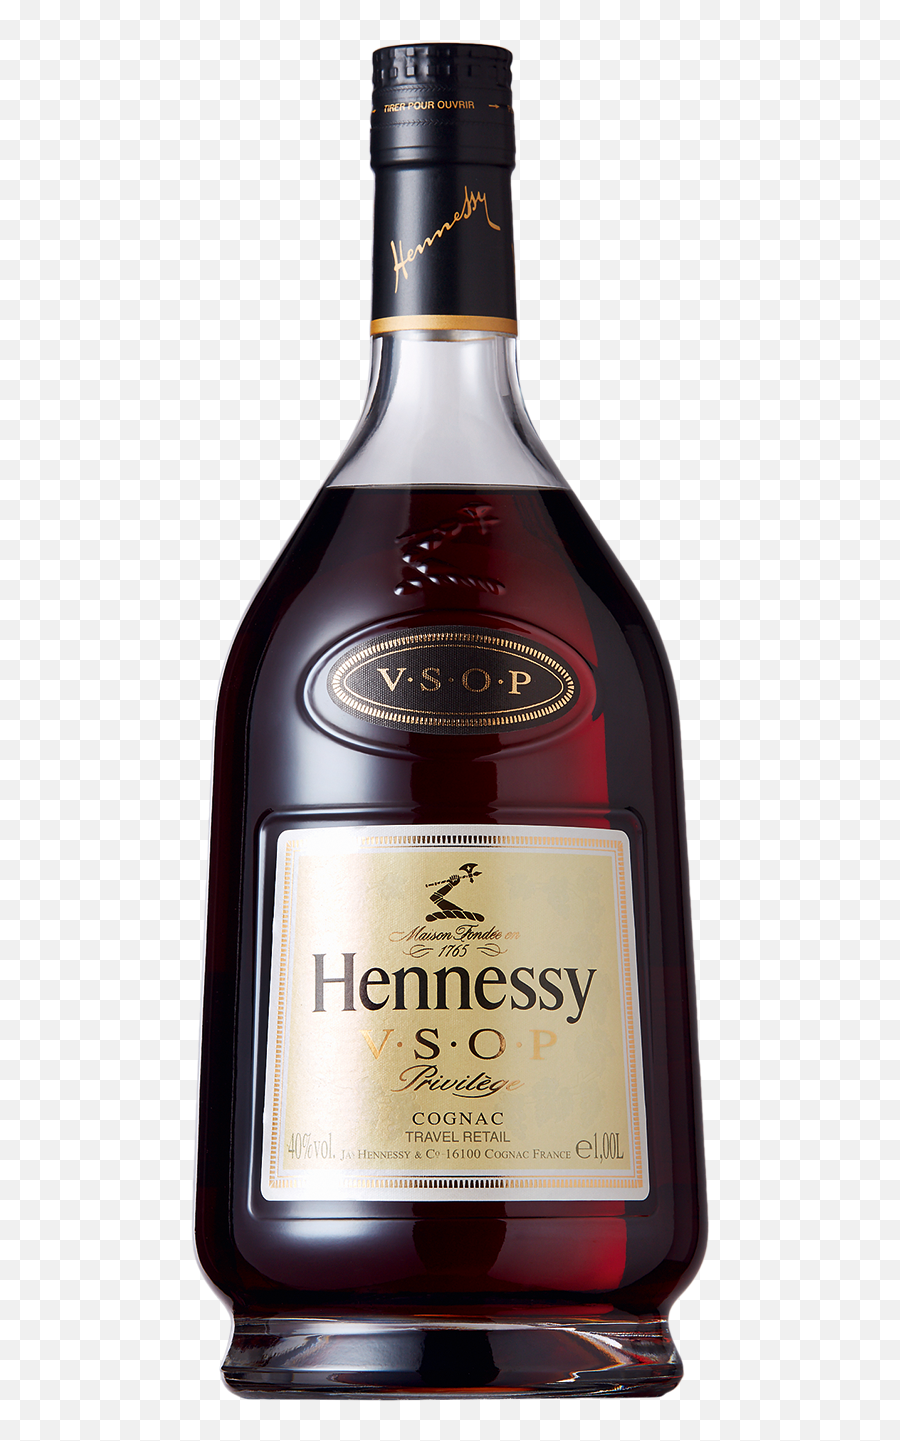 Hennessy Vsop Privilege Cognac 1l 40 - Hennessy Vsop Cognac Product Or France Travel Retail Png,Hennessy Bottle Png